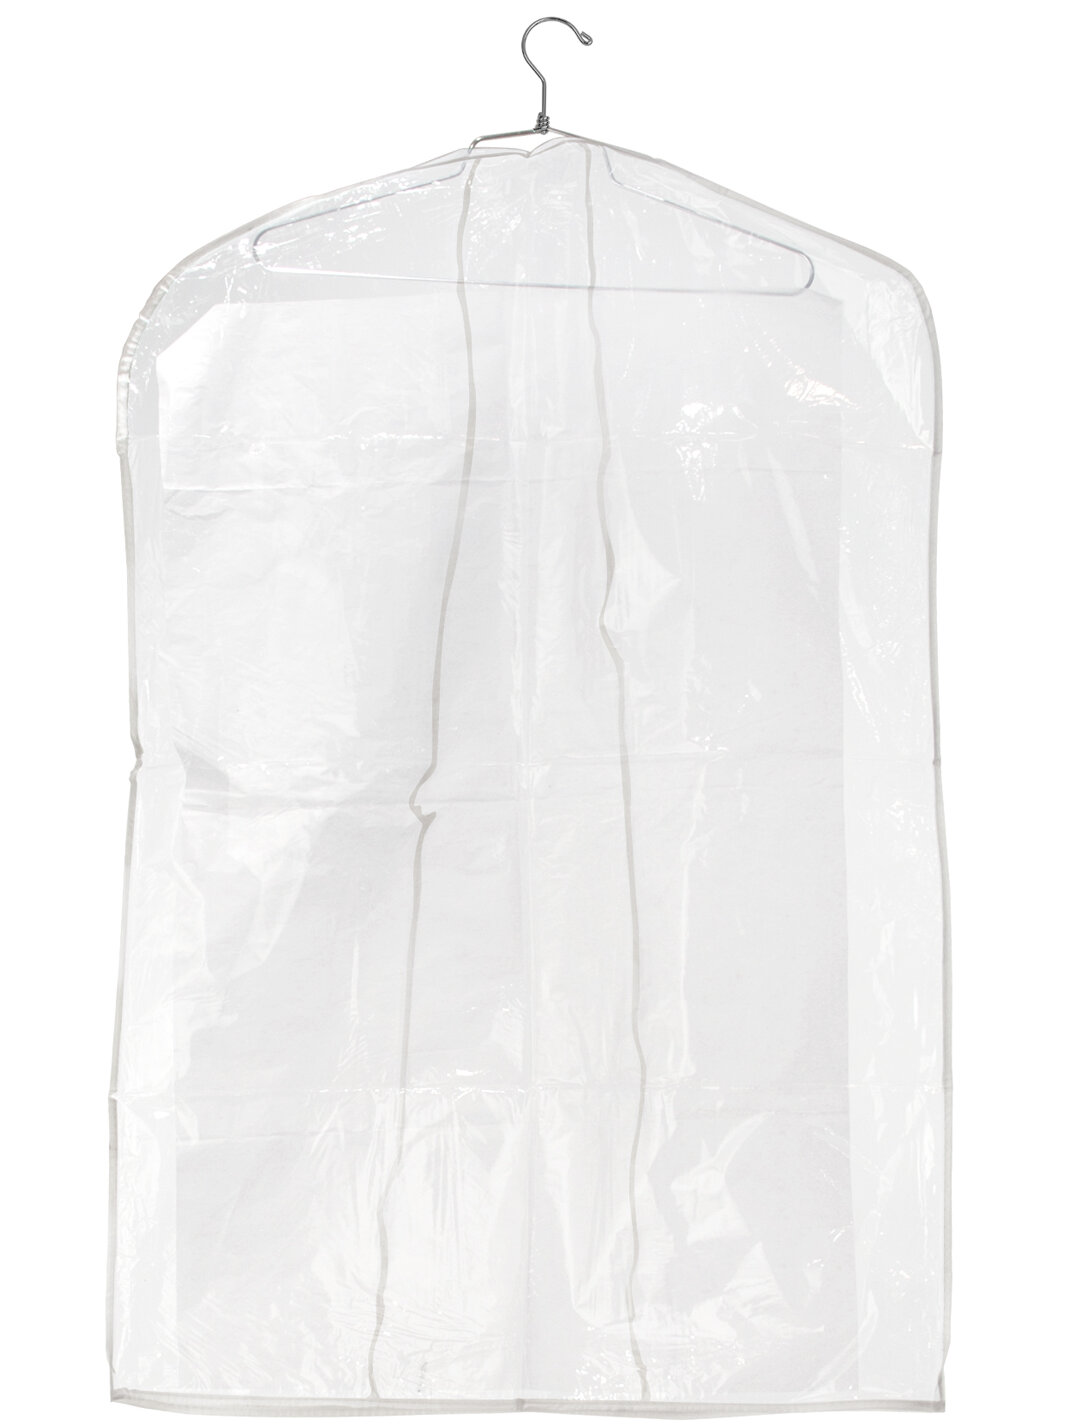 Econoco Plastic / Acrylic Garment Bag